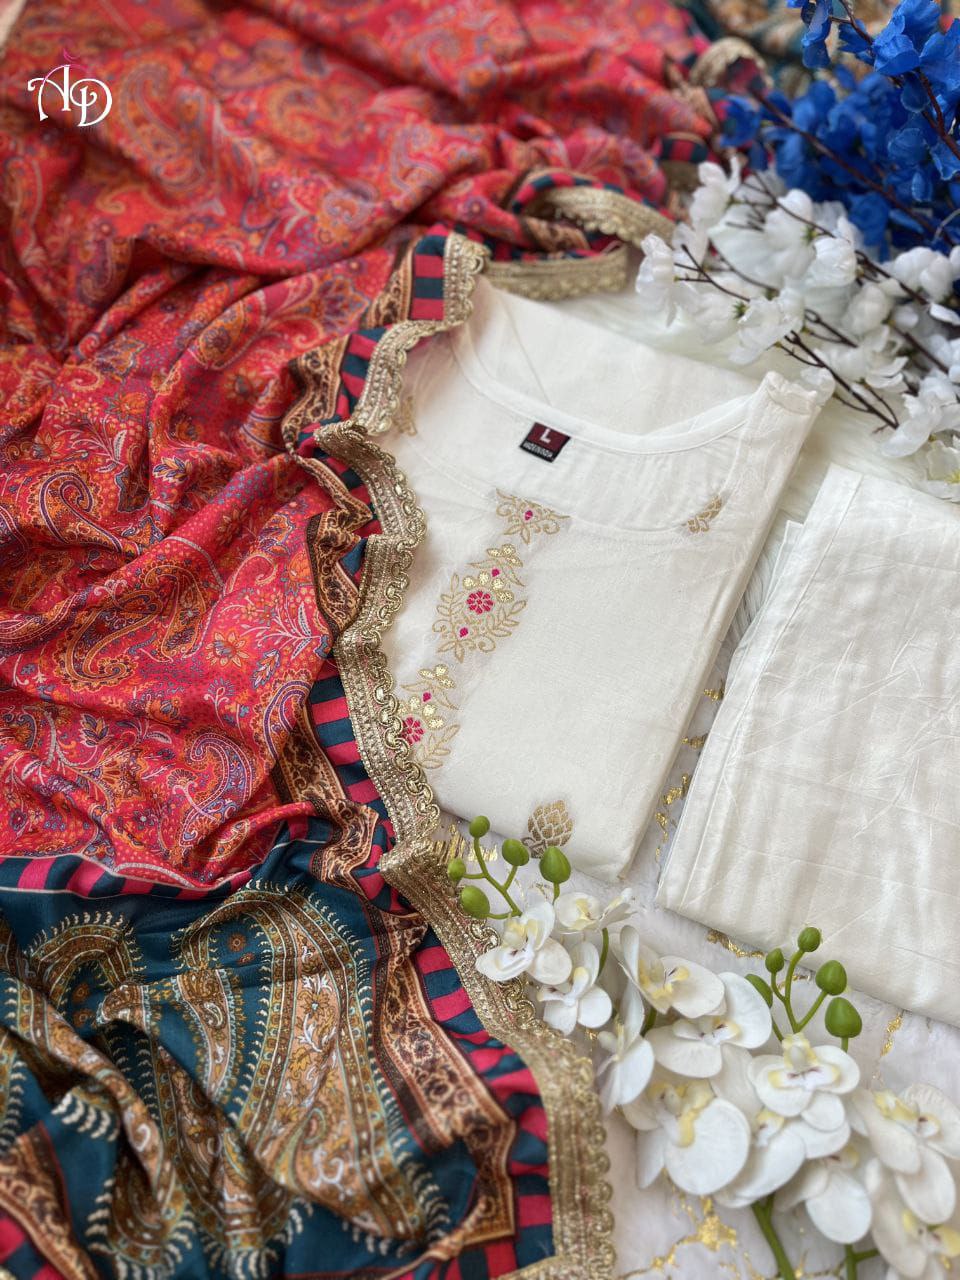 Exquisite Chanderi Suit Ensemble: Heavy Jari Work with Zari Embellishments and Cotton Lining